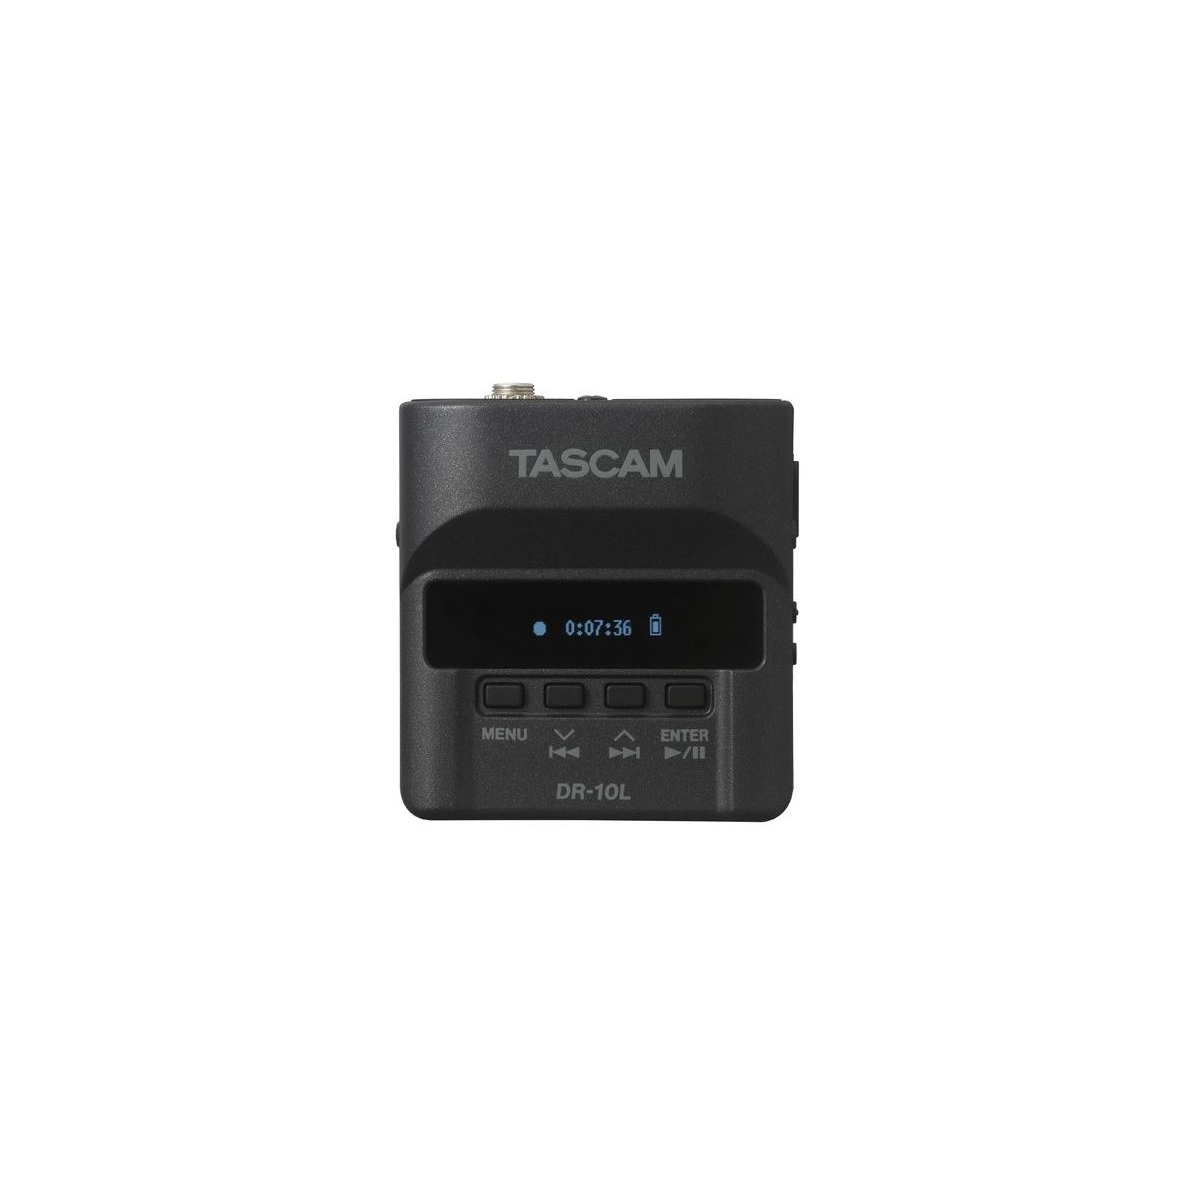 Enregistreurs portables - Tascam - DR-10L